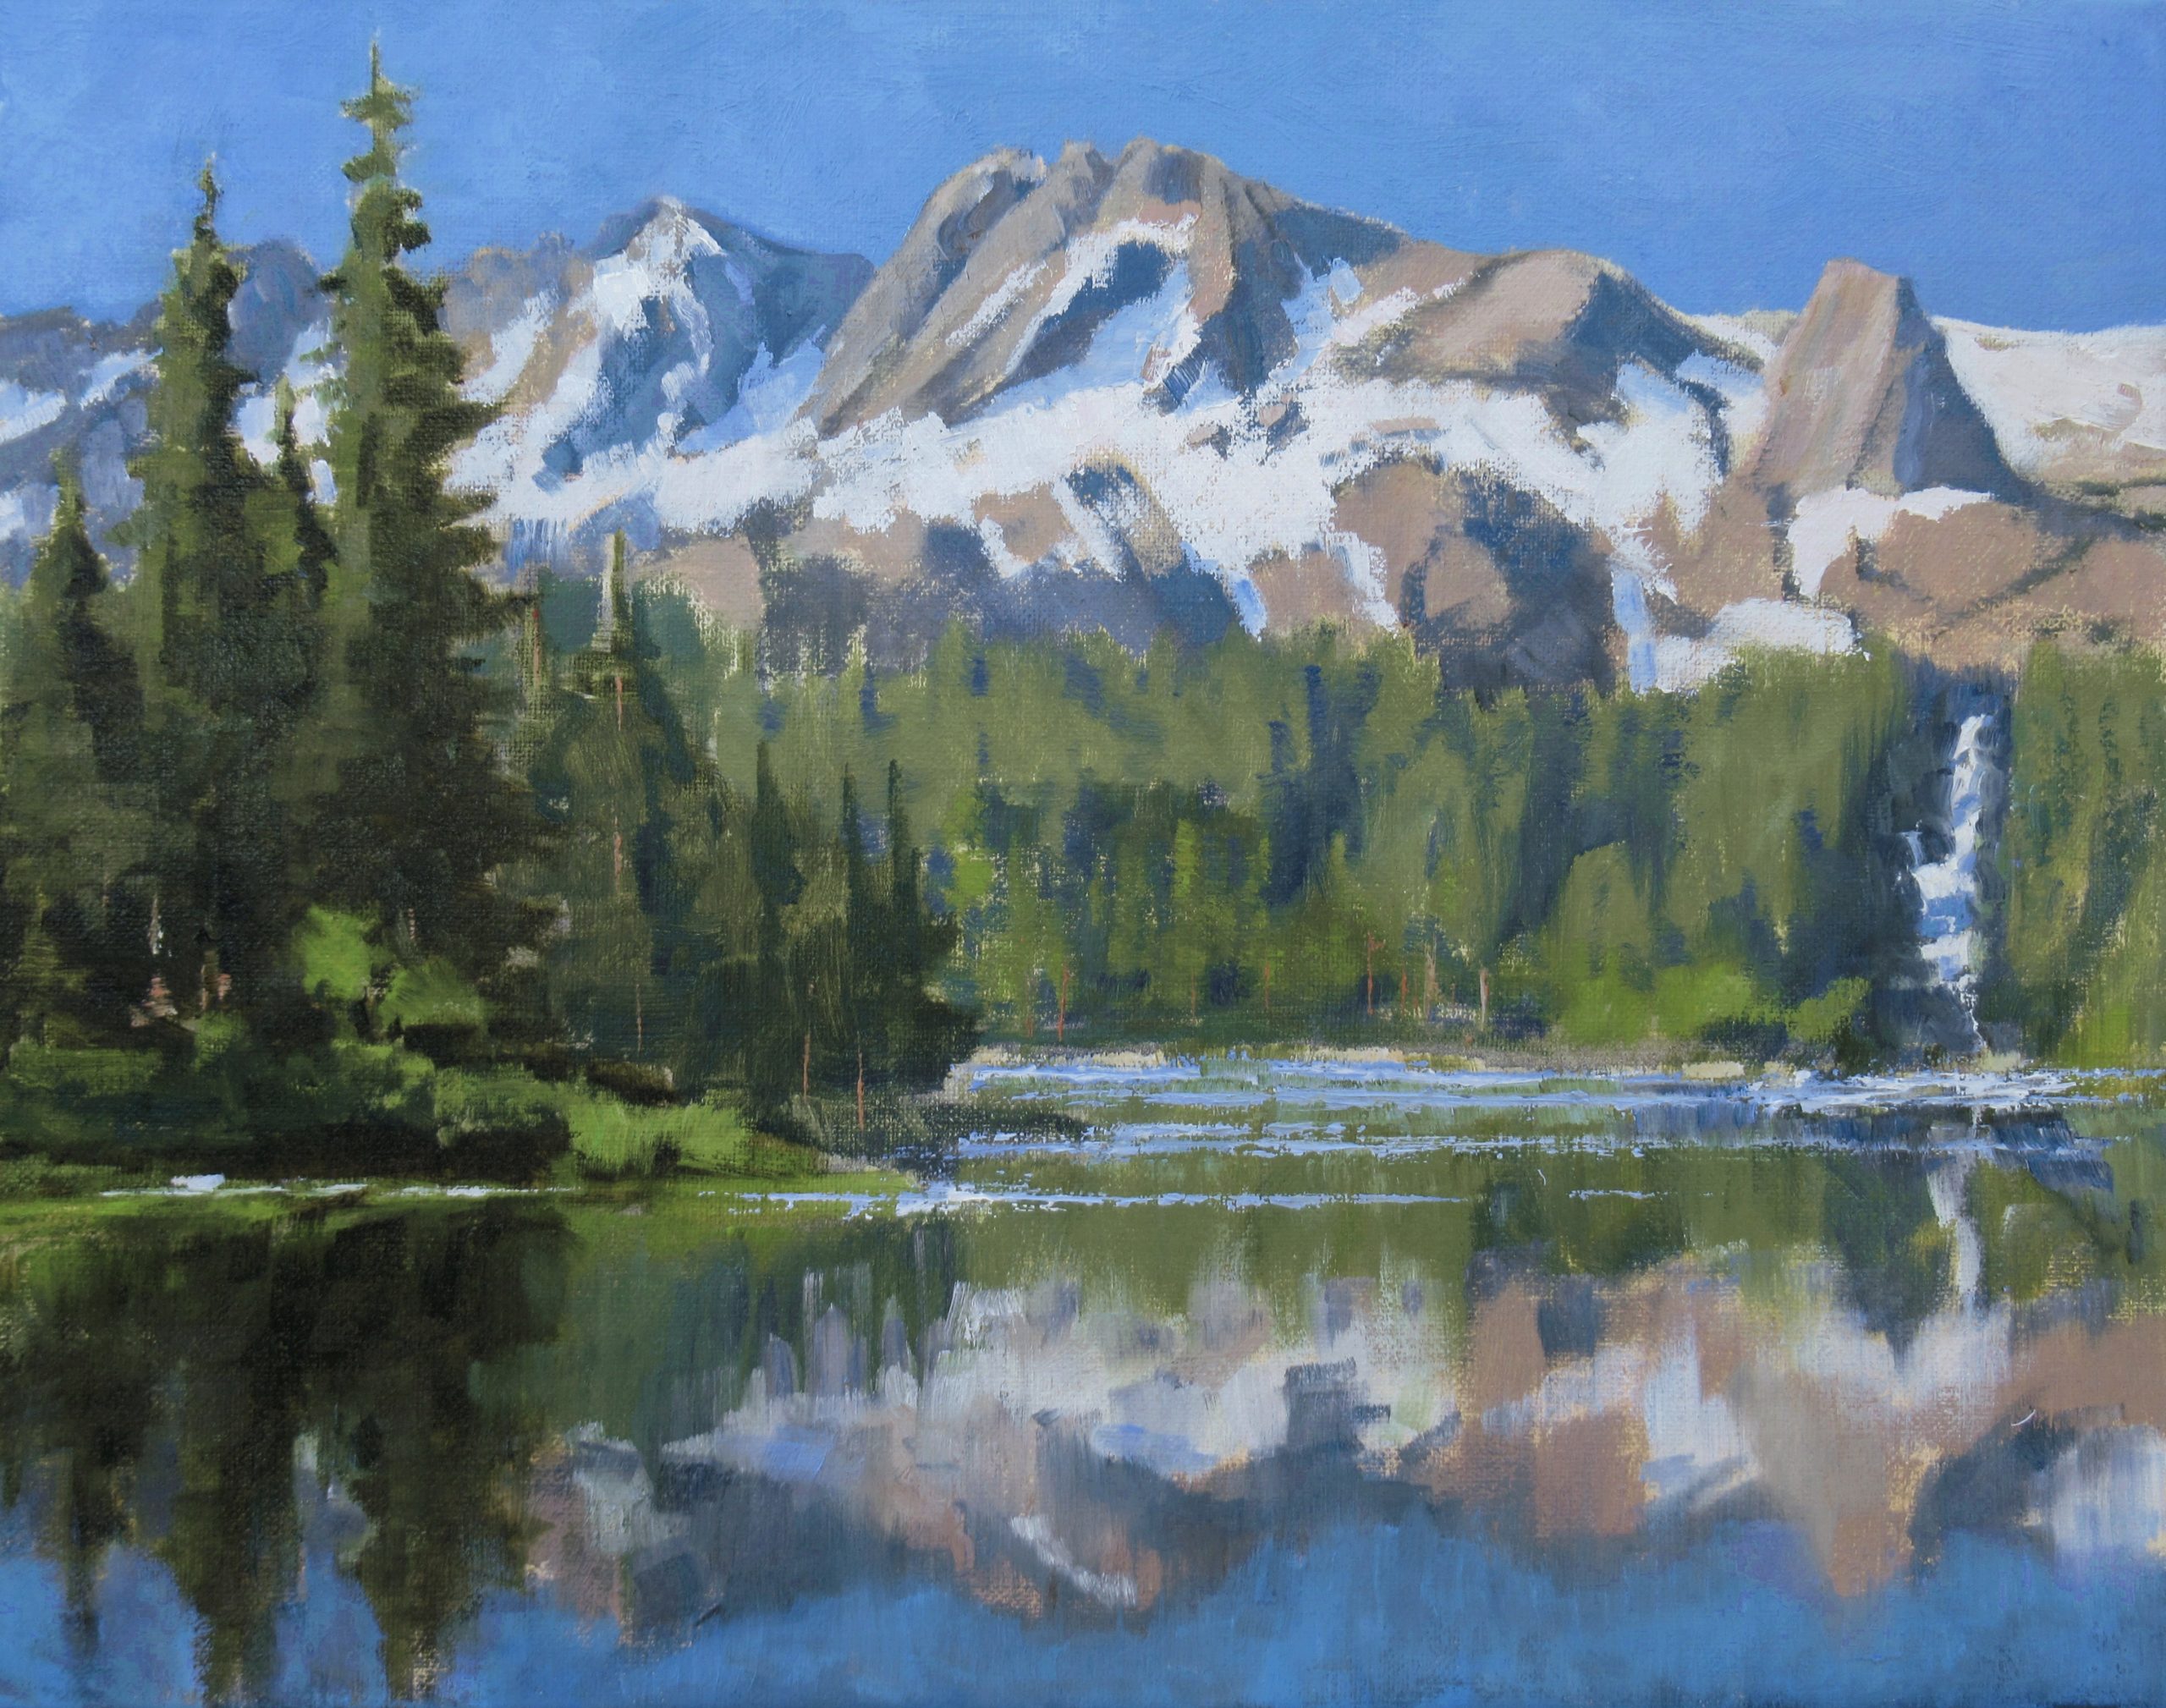 Sharon Weaver, "Mammoth Lake Summer," 11 x 14 in., Oil, at Twin Lakes near Mammoth Lakes, CA.